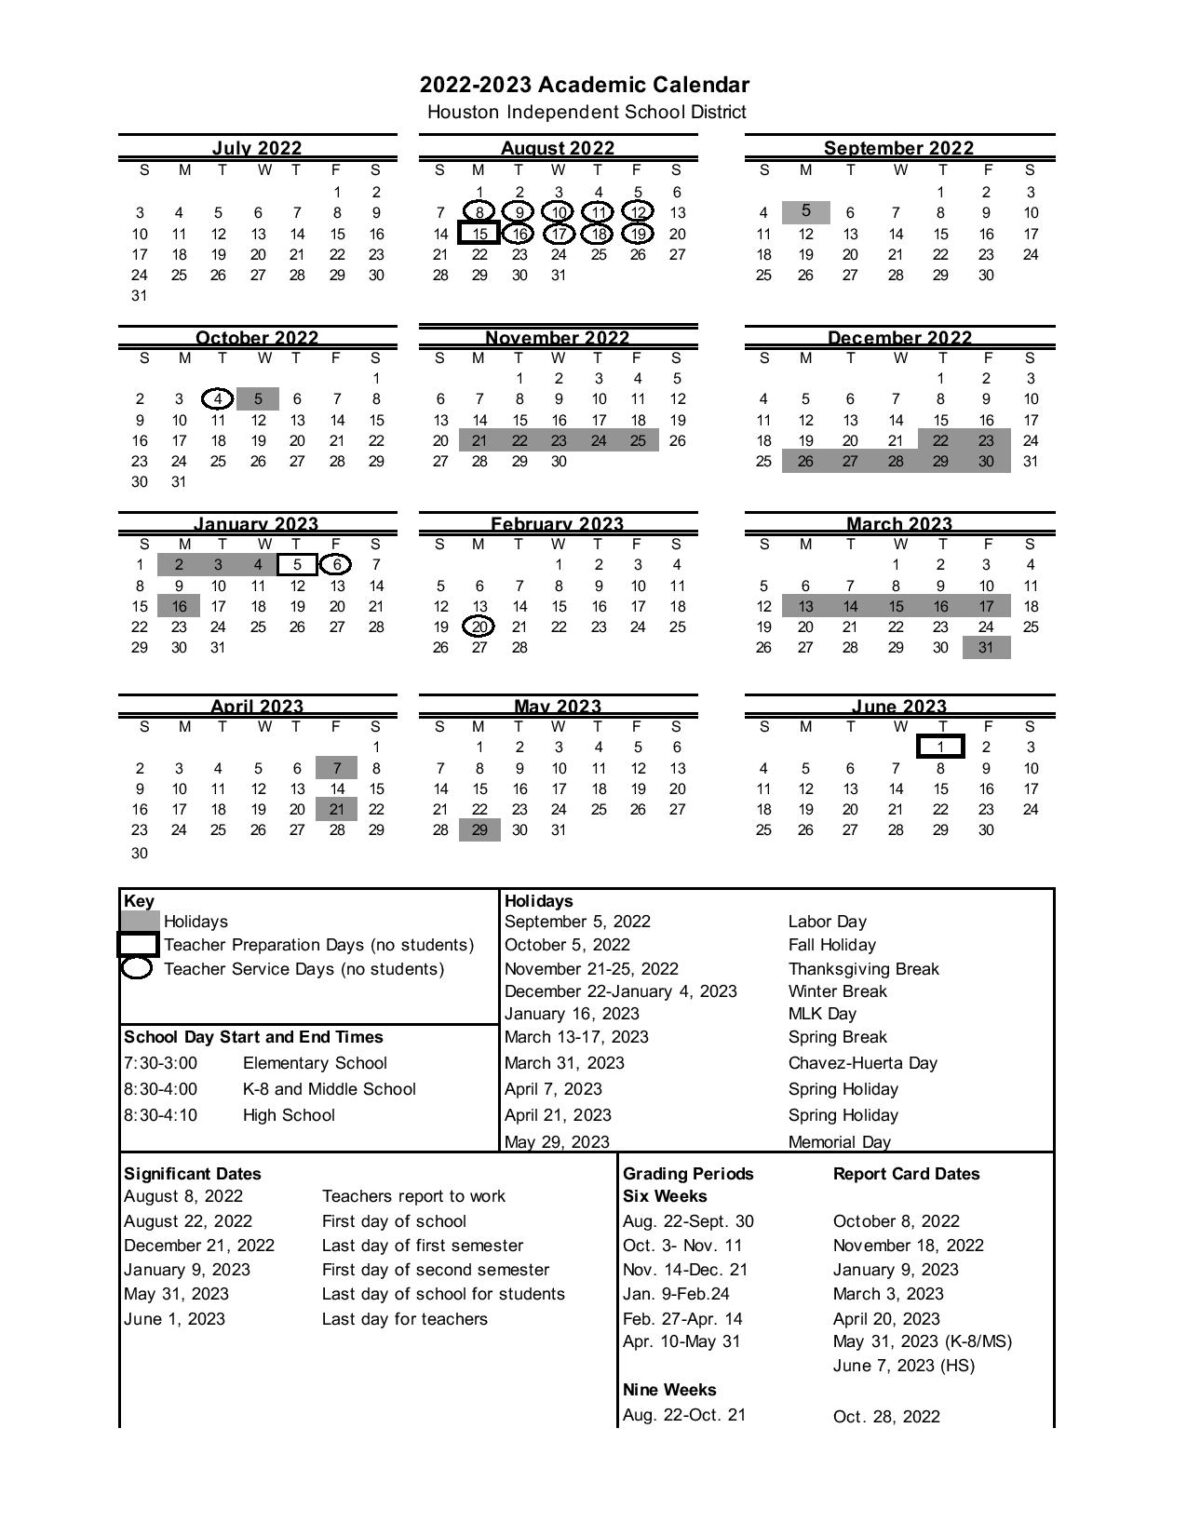 Houston Independent School District Calendar 20222023 PDF